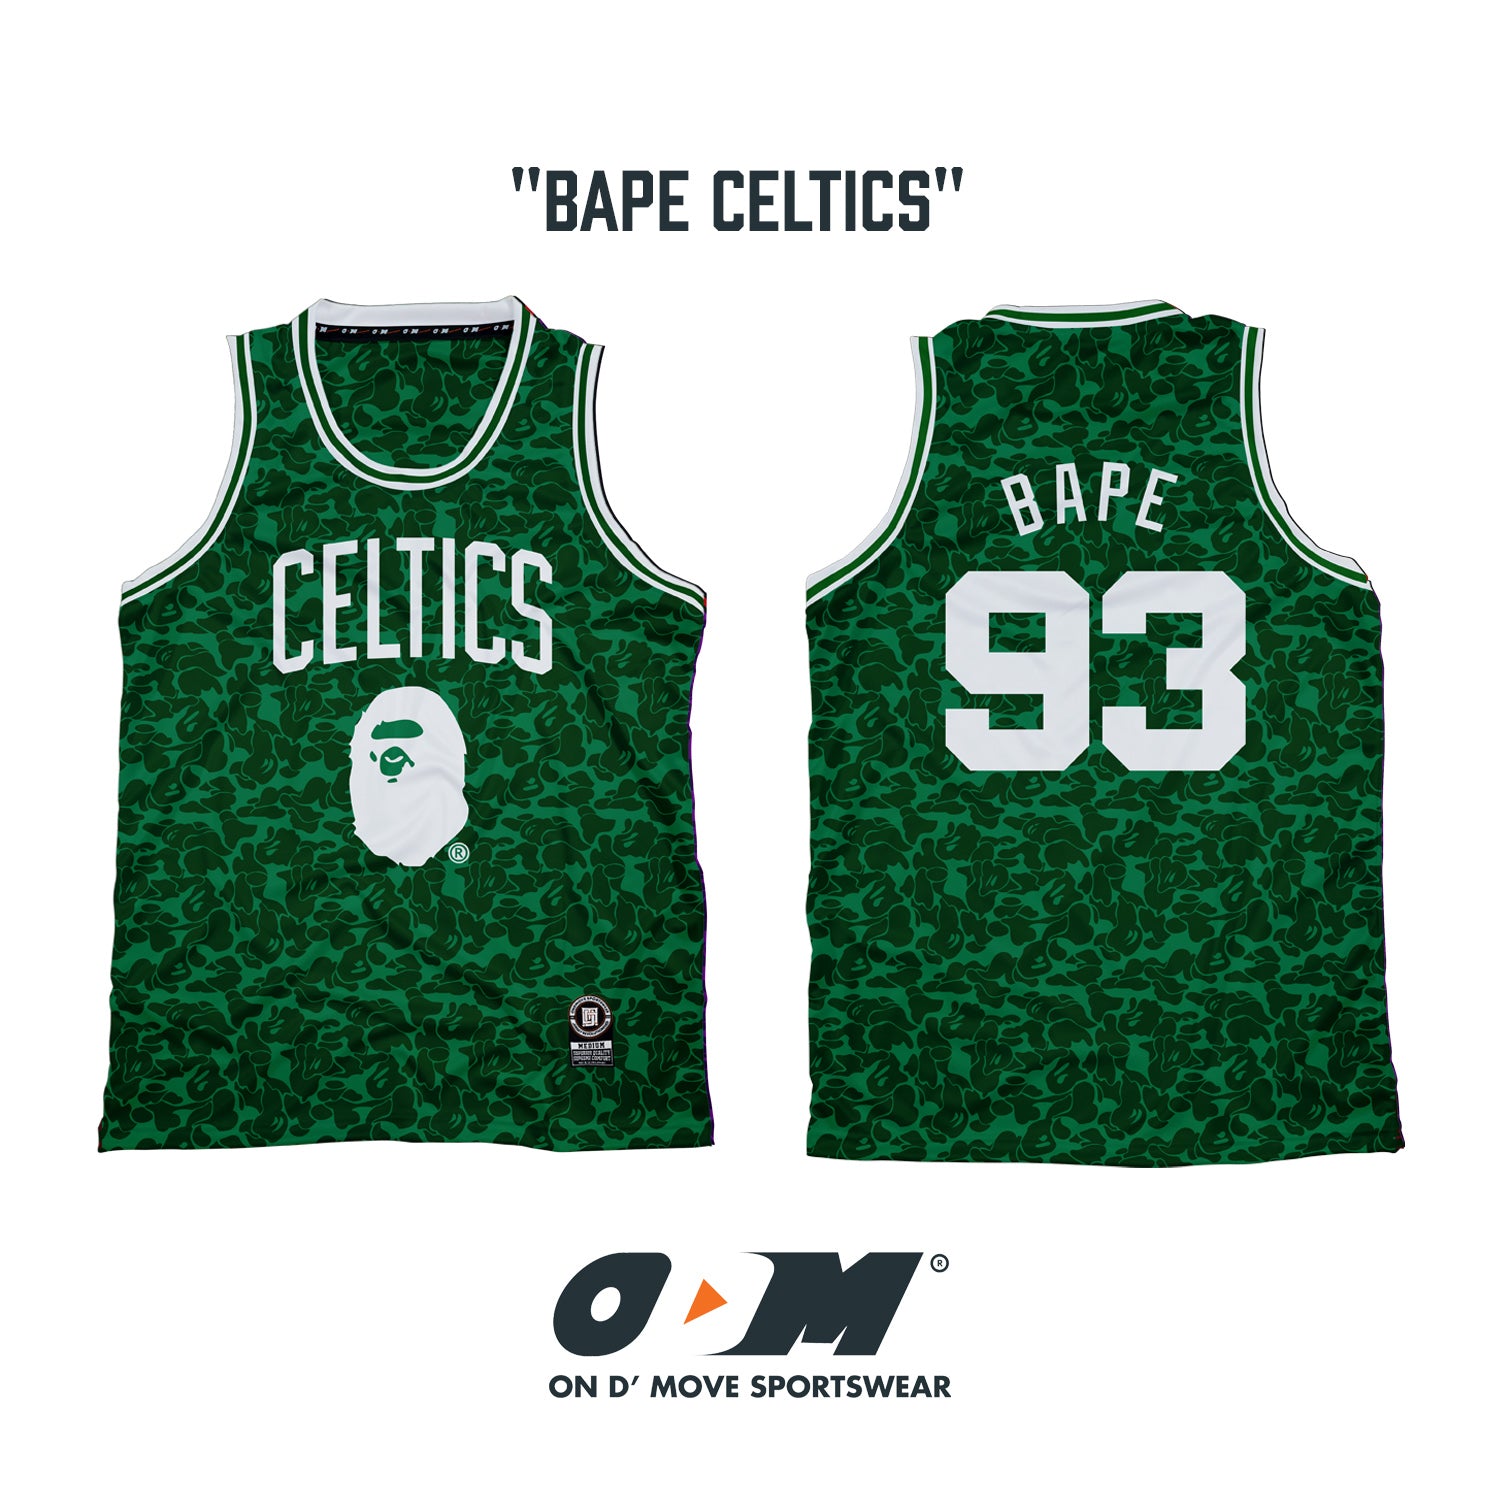 BAPE Celtics Jersey